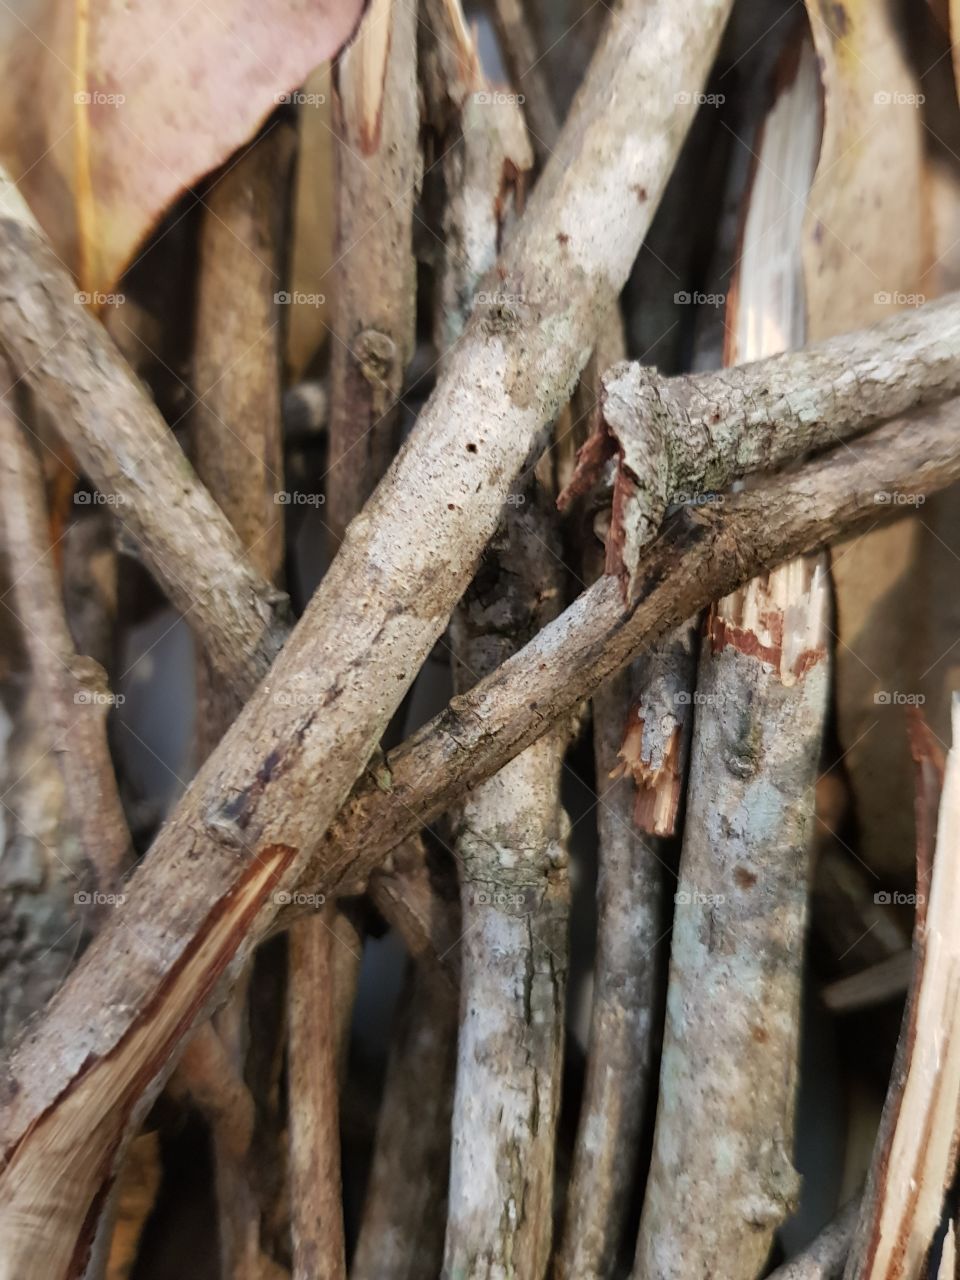 Pile of sticks